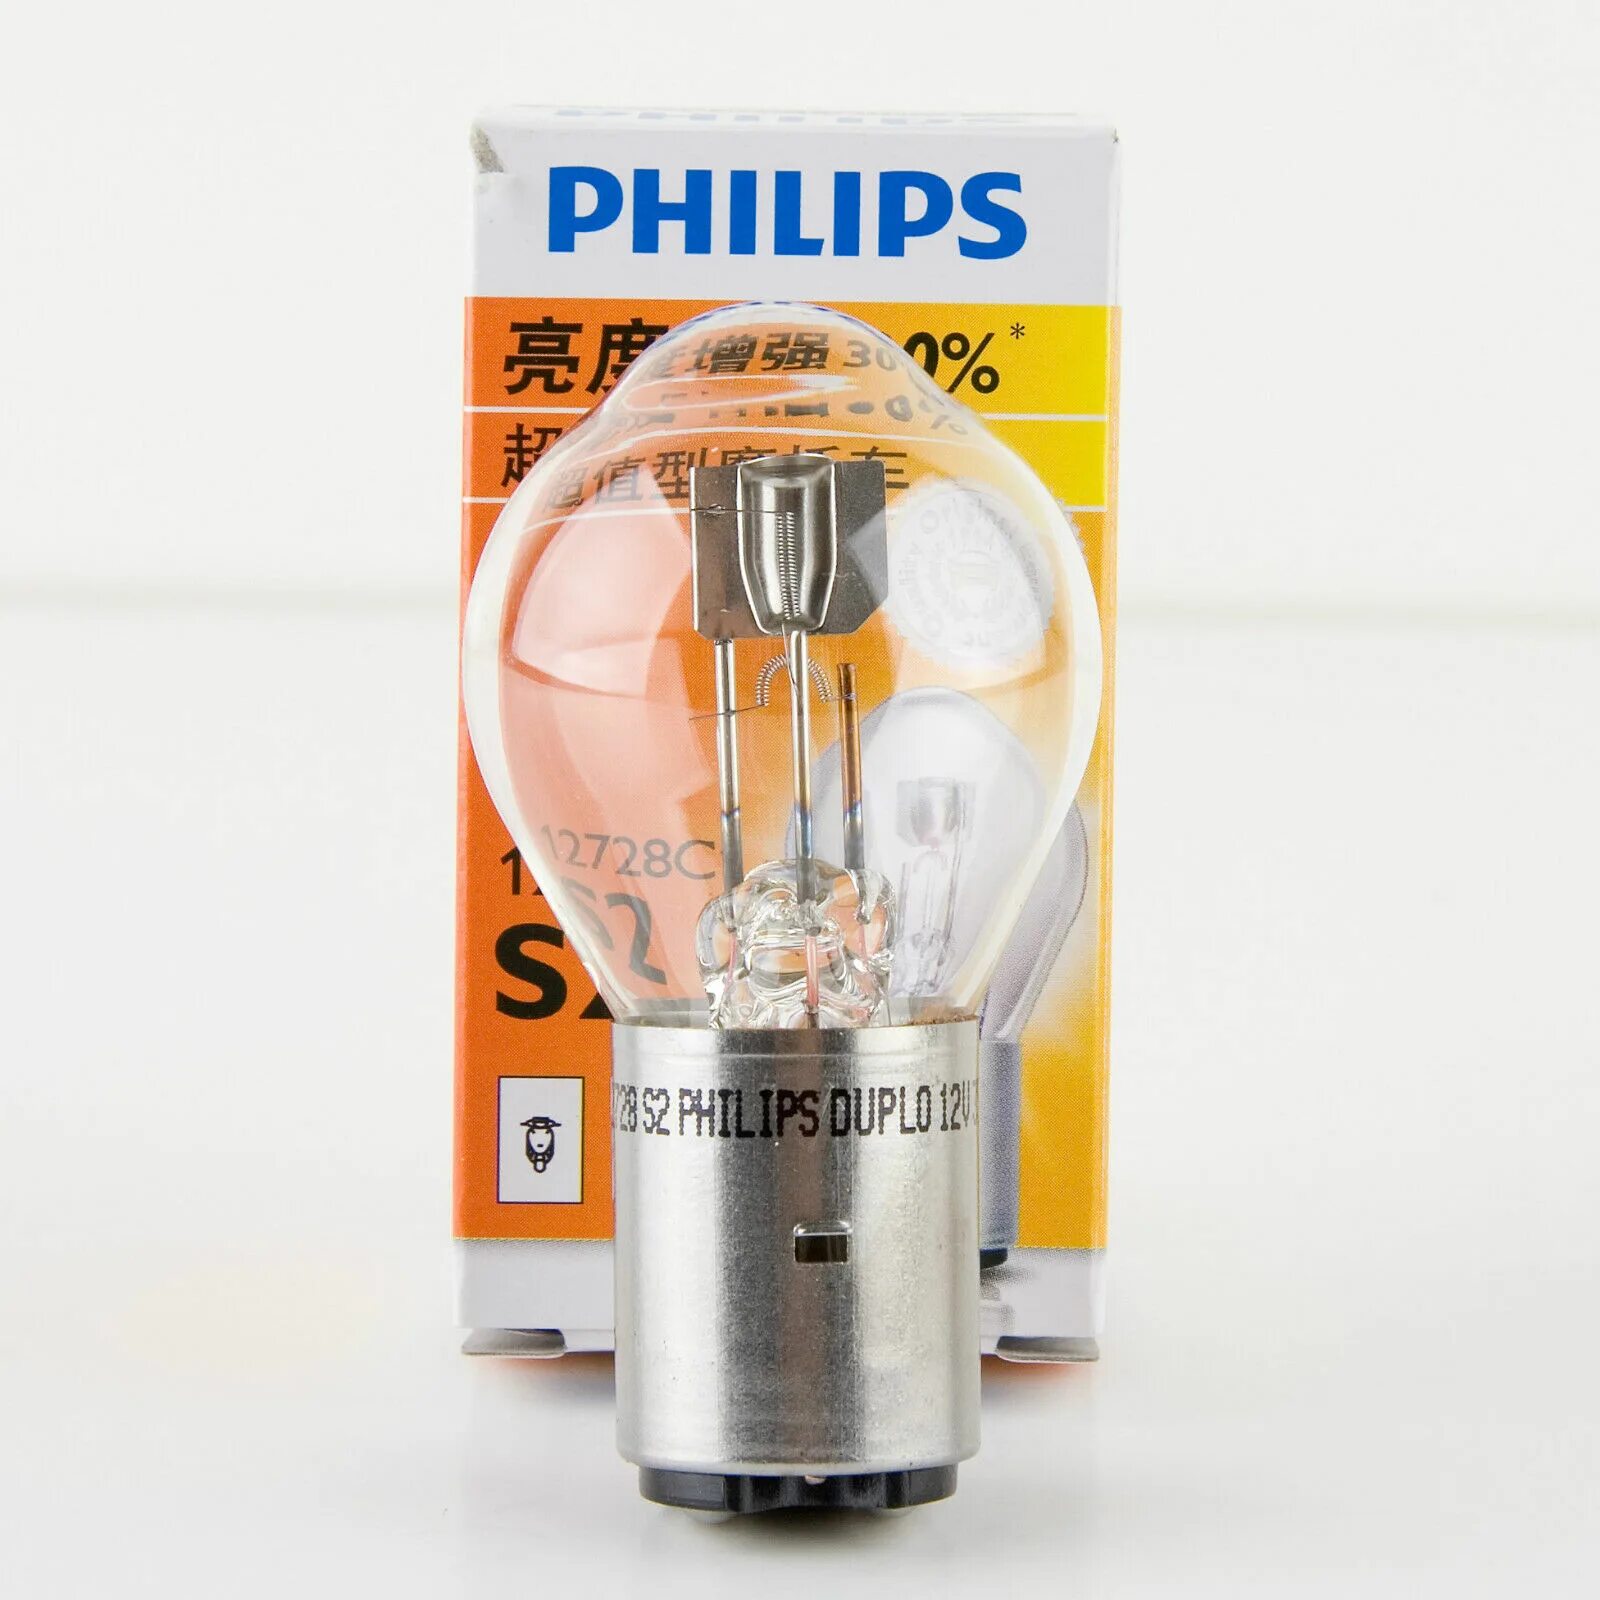 Лампа Philips Duplo 12v 35/35w светодиодная. Лампа Филипс s2 ba20d 12 v 35/35 w. Лампа ba20d 12v 35/35w светодиодная. Лампочка Филипс 12v 35w. 12v 35 35w